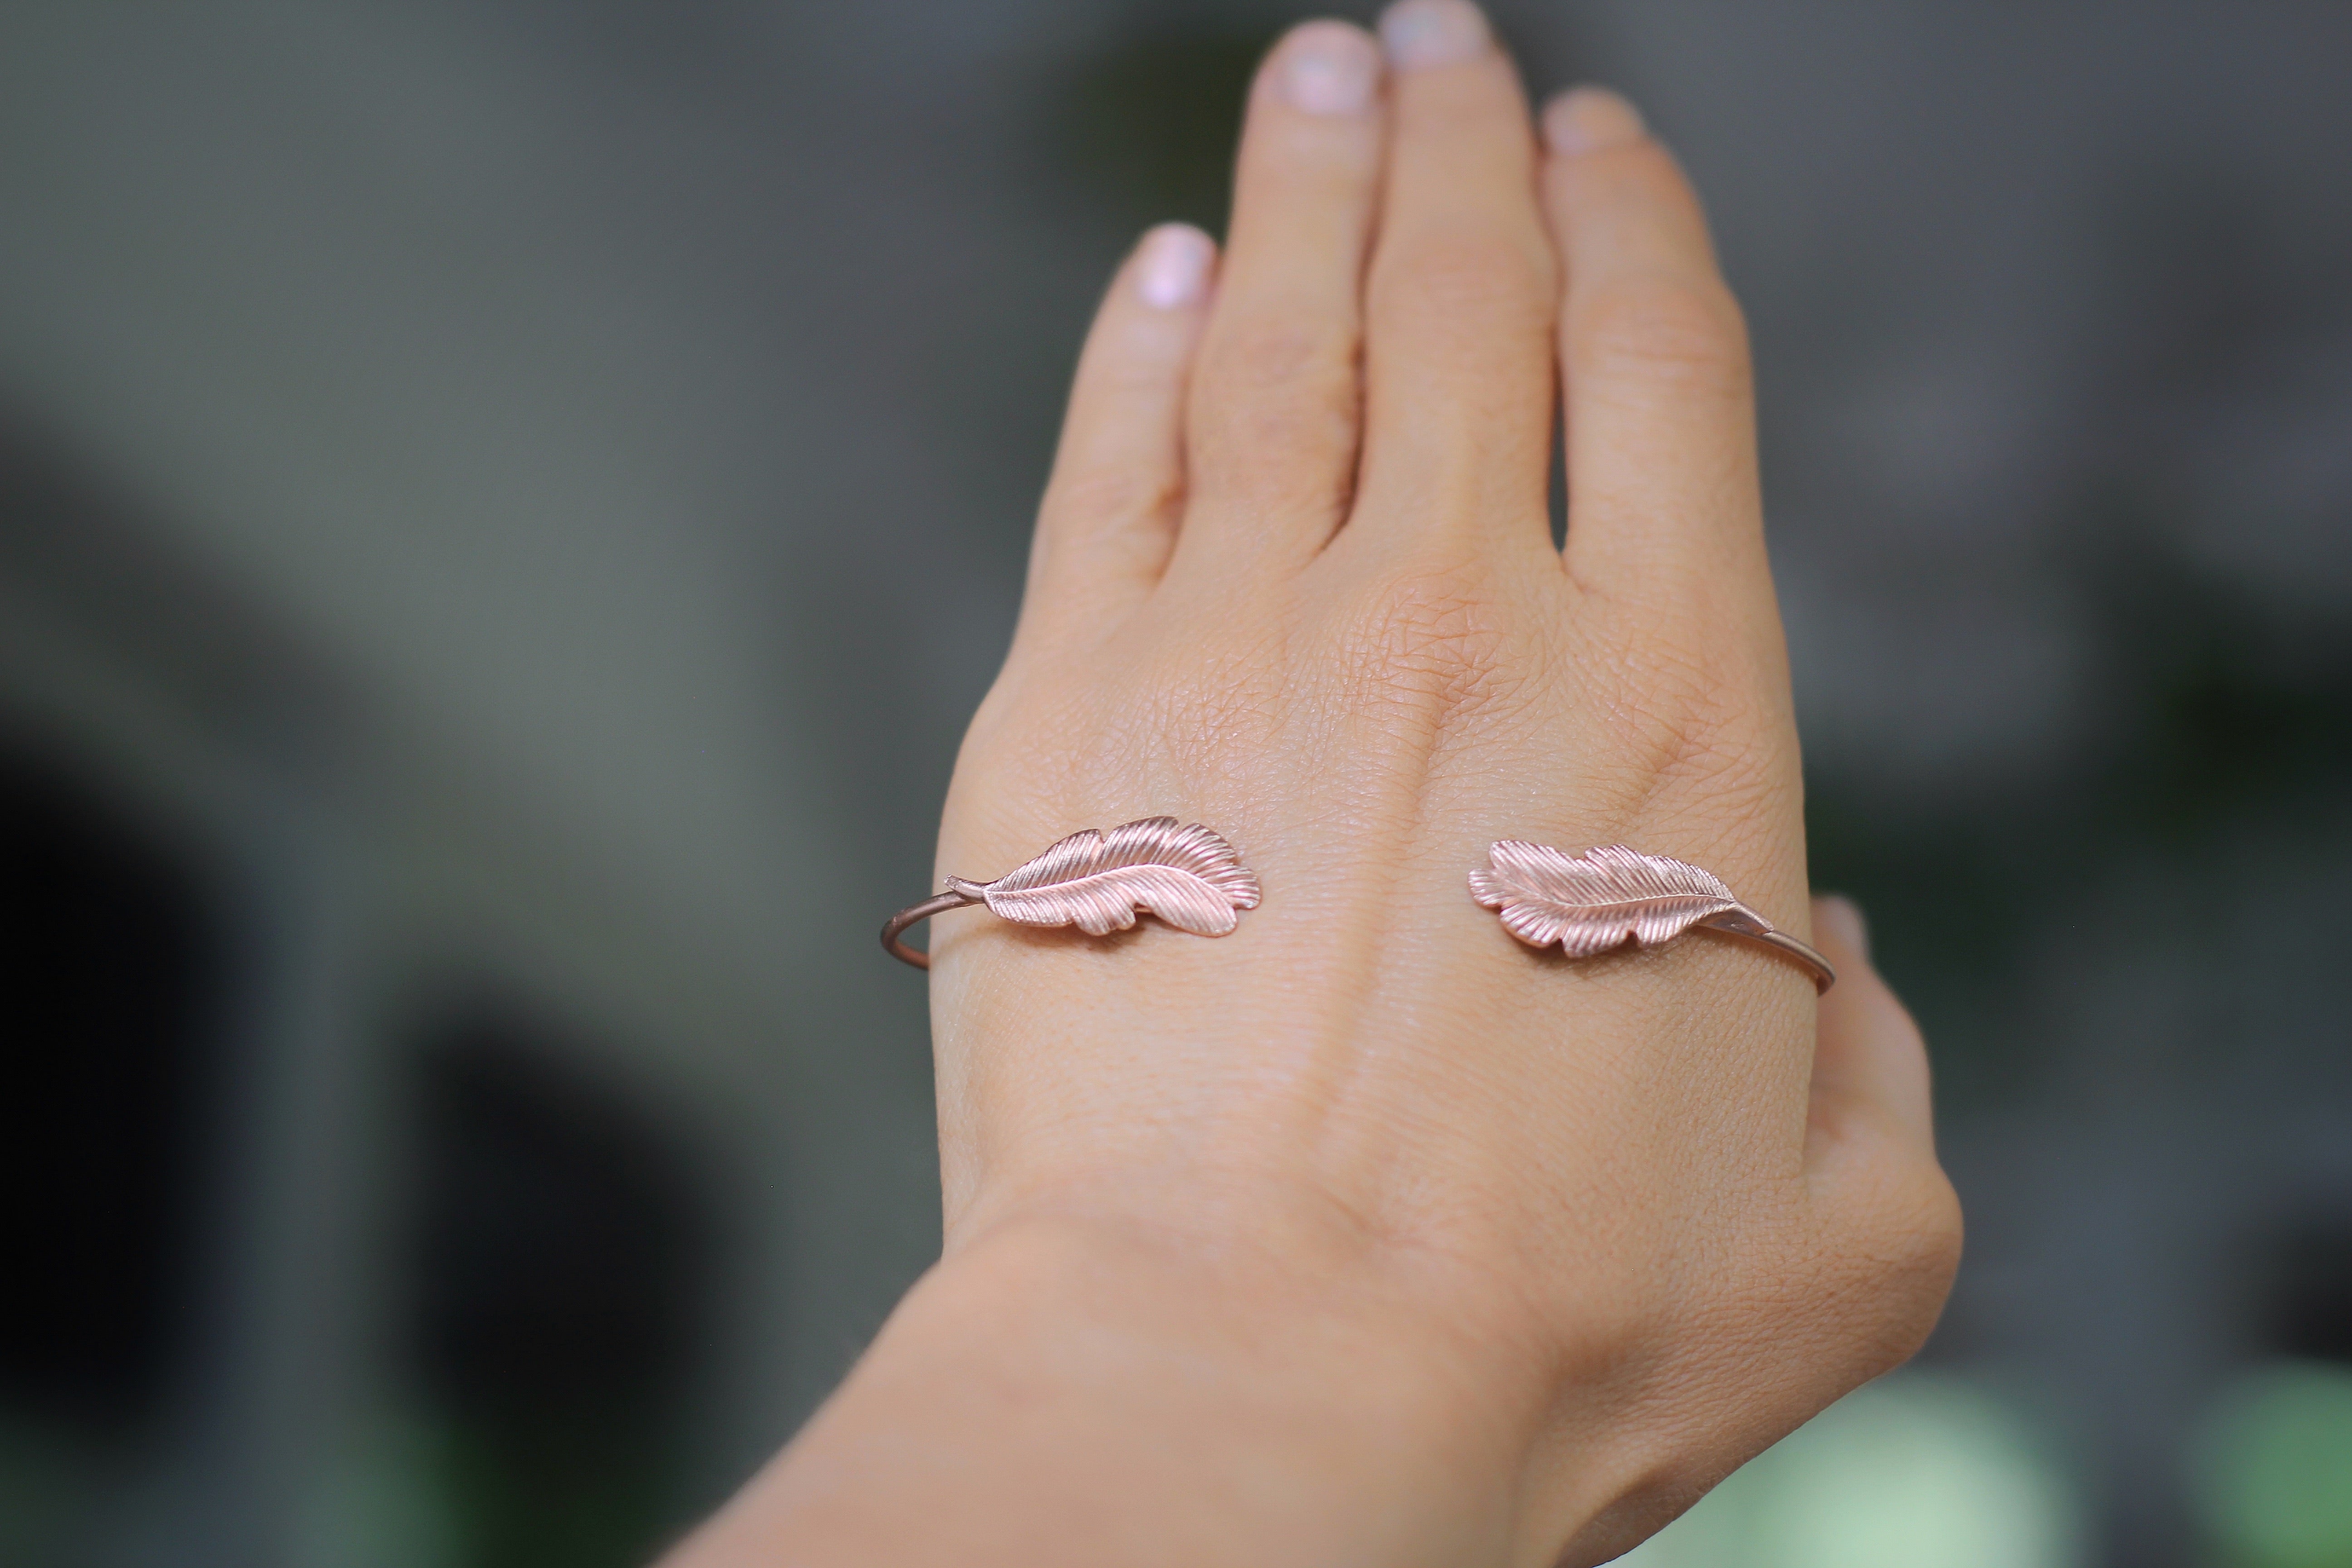 ELECTROPRIME Hand Cuff Palm Bracelet Ring Crystal Zircon Bangle Bridal  Flowergirl Jewelry : Amazon.in: Jewellery